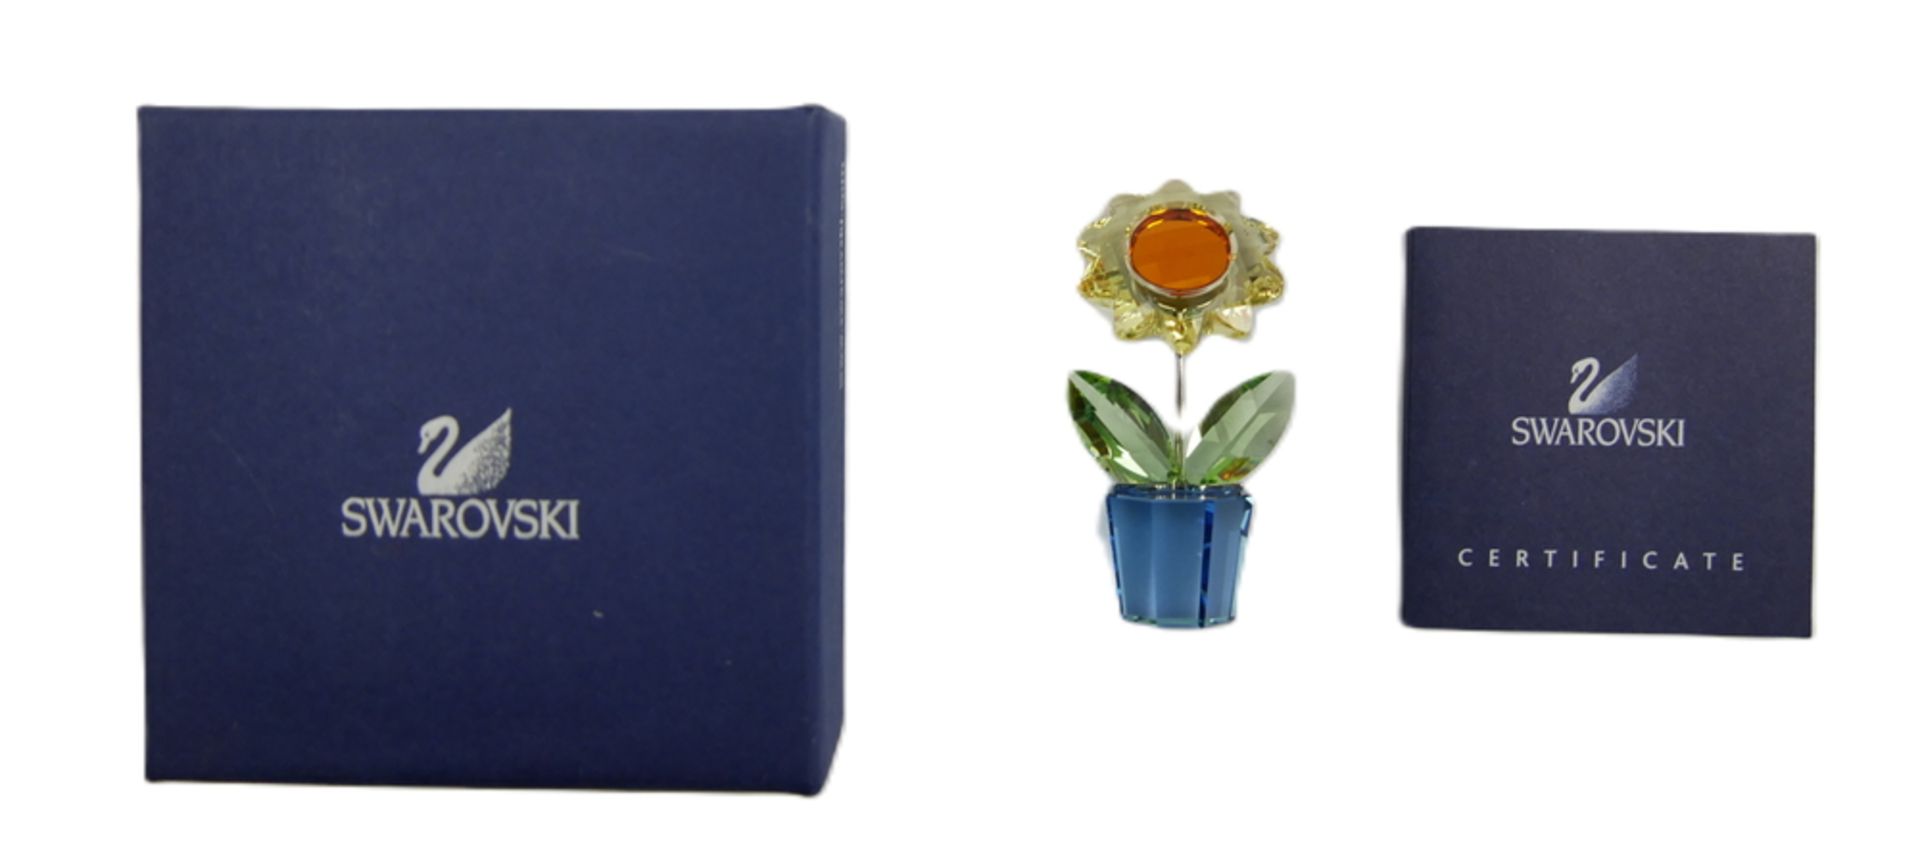 Swarovski Blume im Originalkarton. Top Zustand.